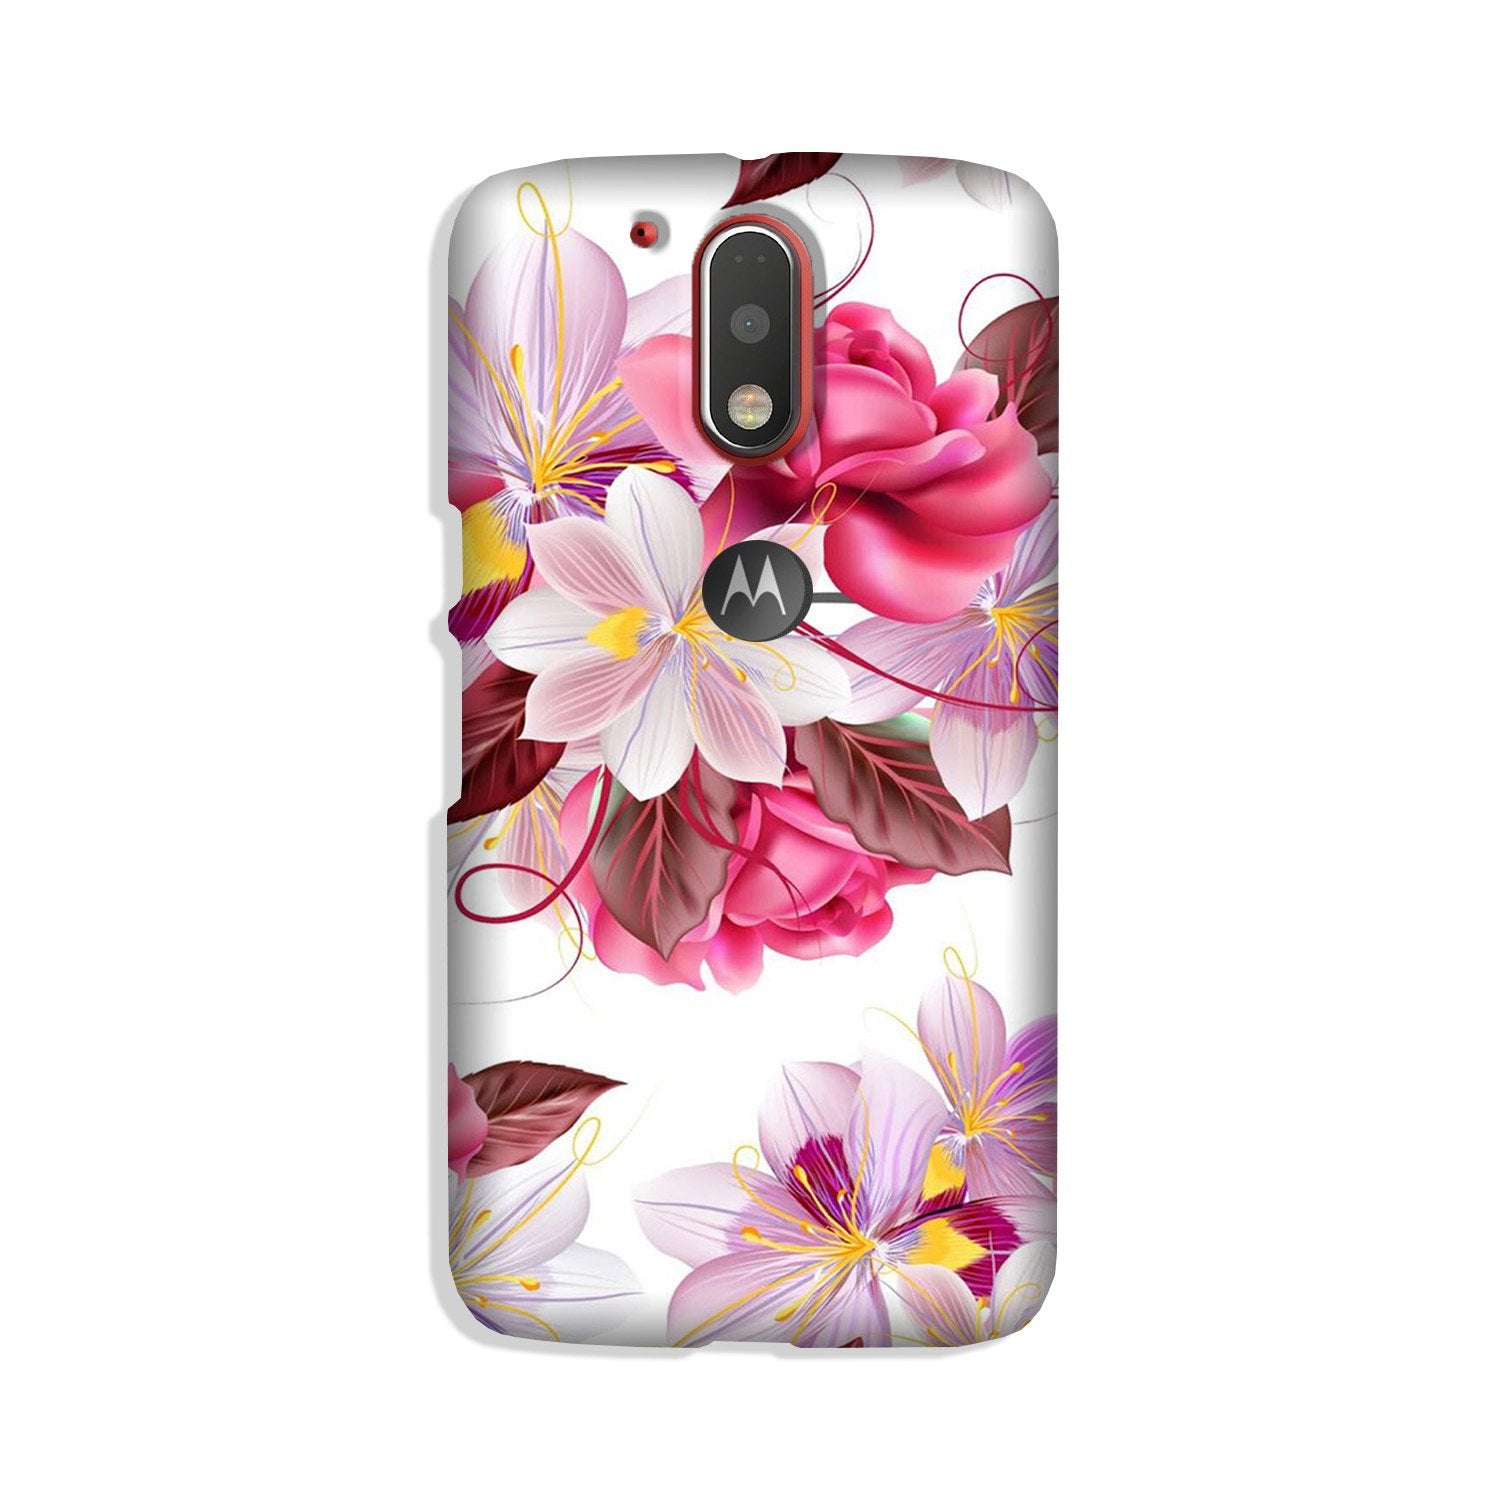 Beautiful flowers Case for Moto G4 Plus